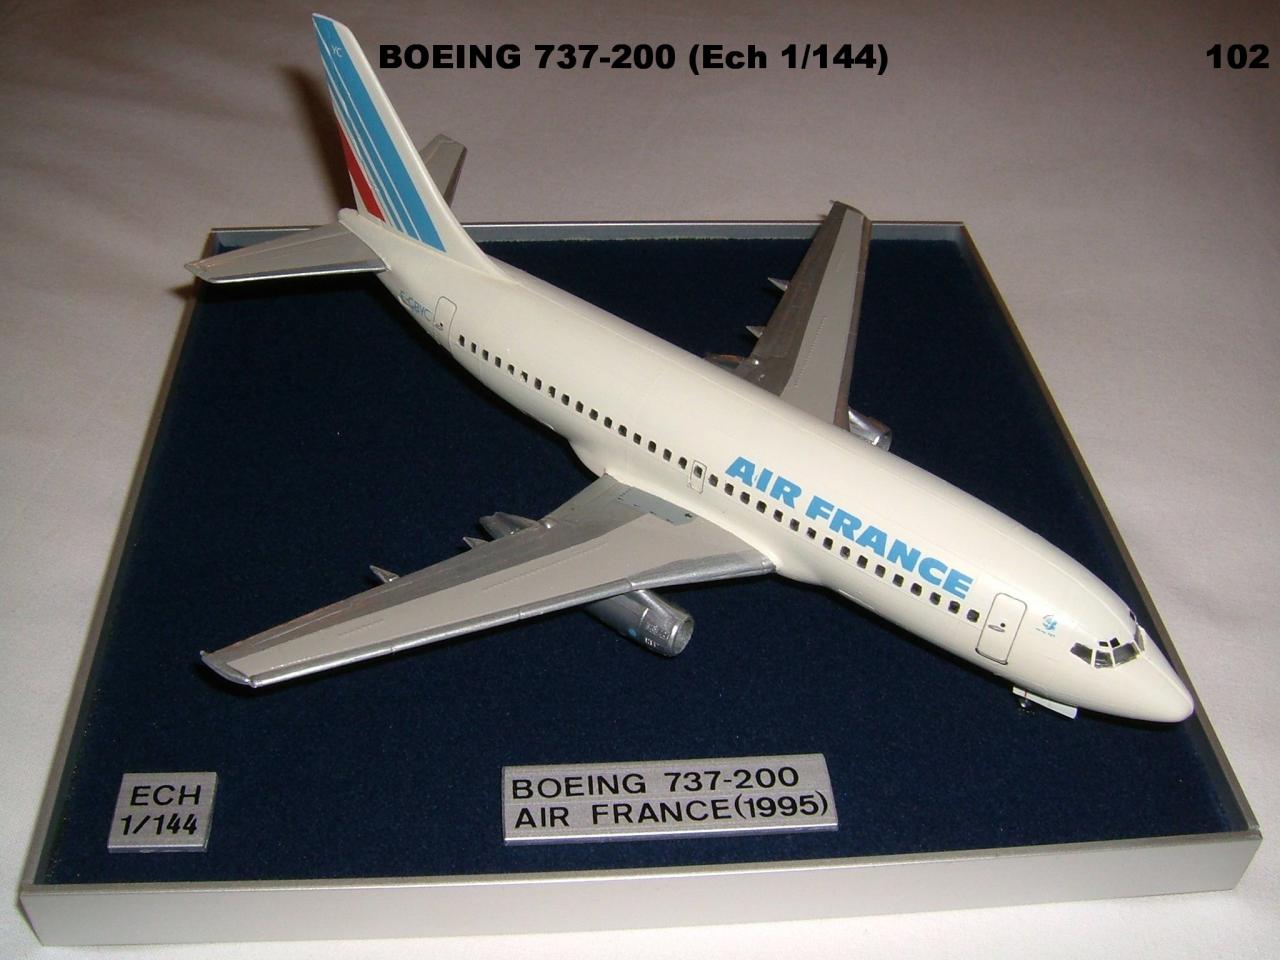 BOEING 737-200 AIR FRANCE